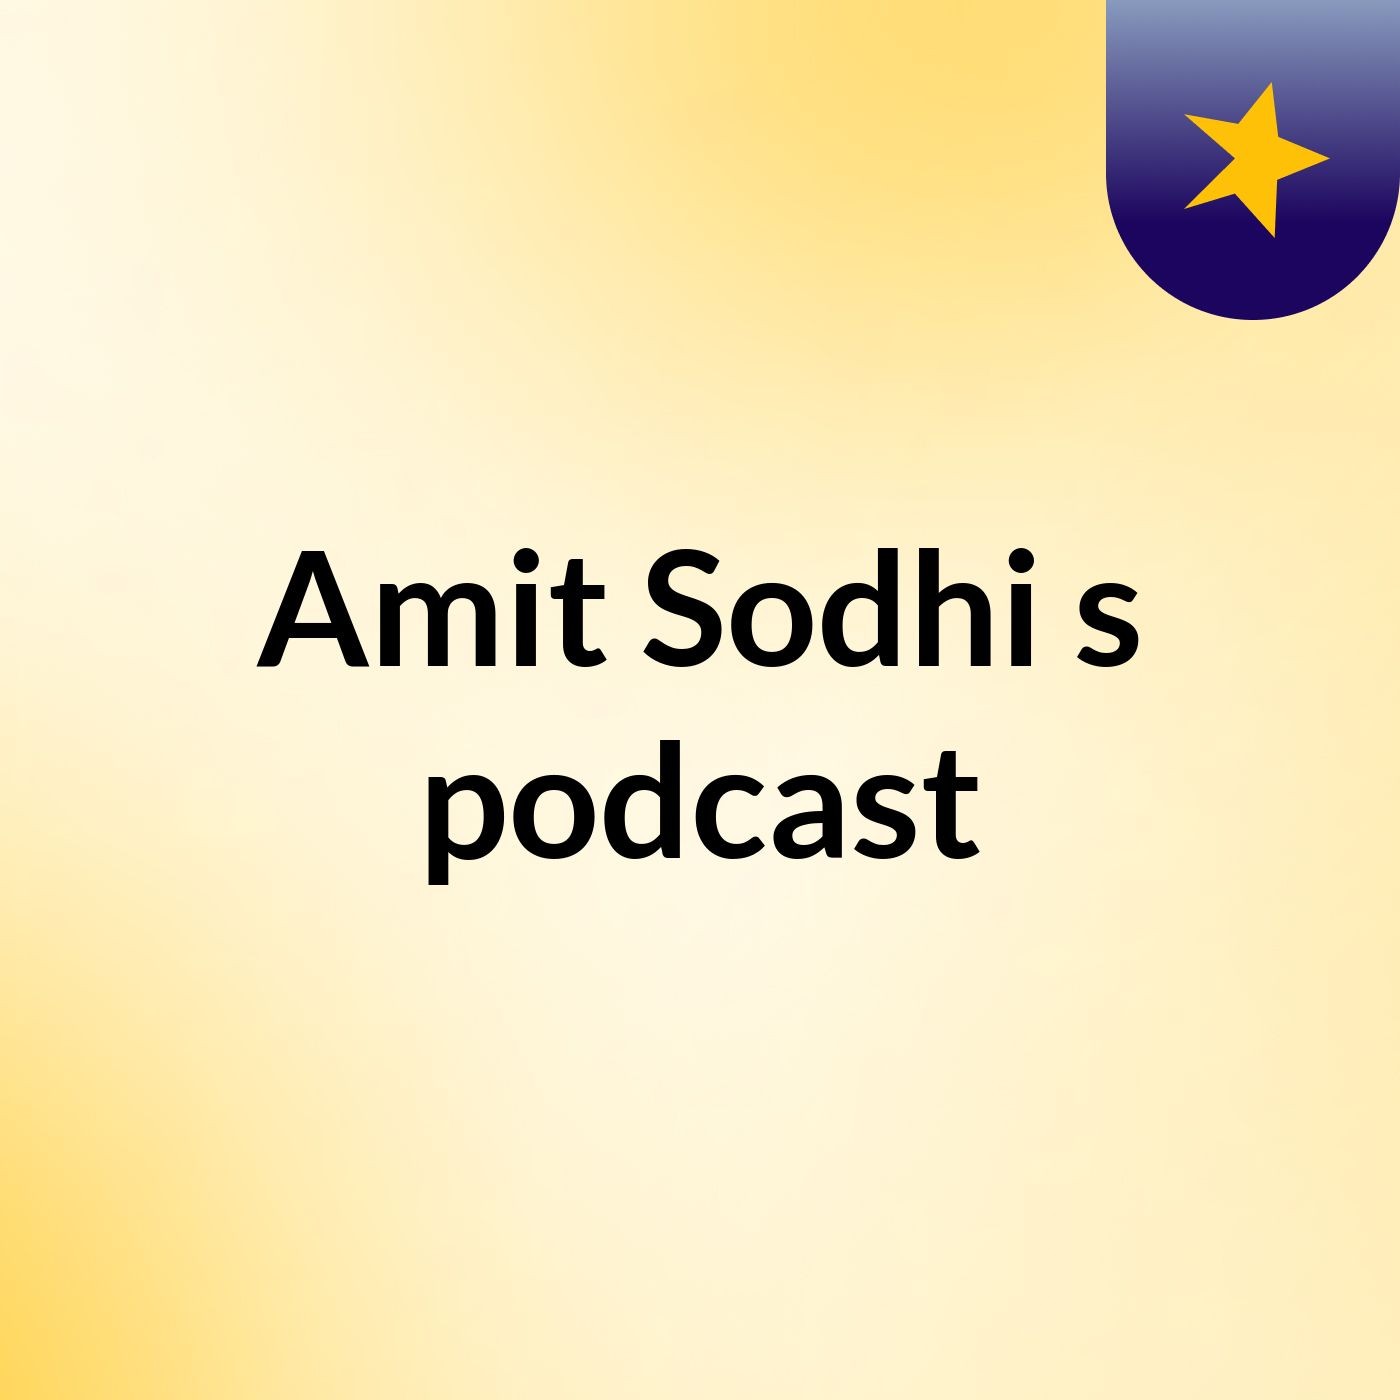 Amit Sodhi's podcast